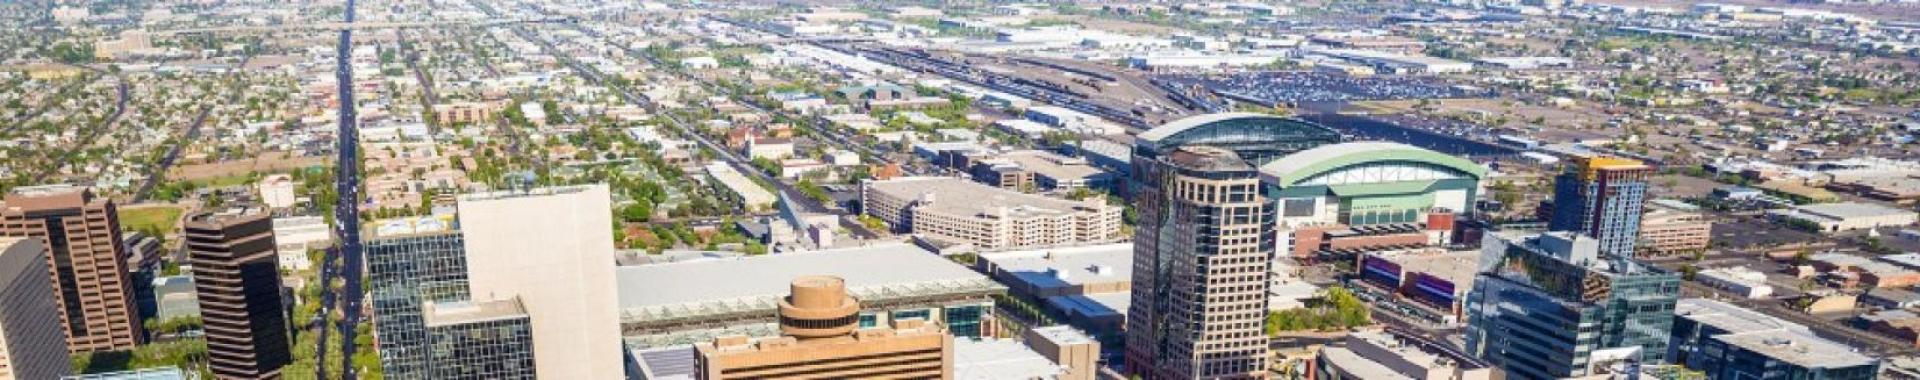 Aerial view of downtown Phoenix, Arizona and surounding neighborhoods.